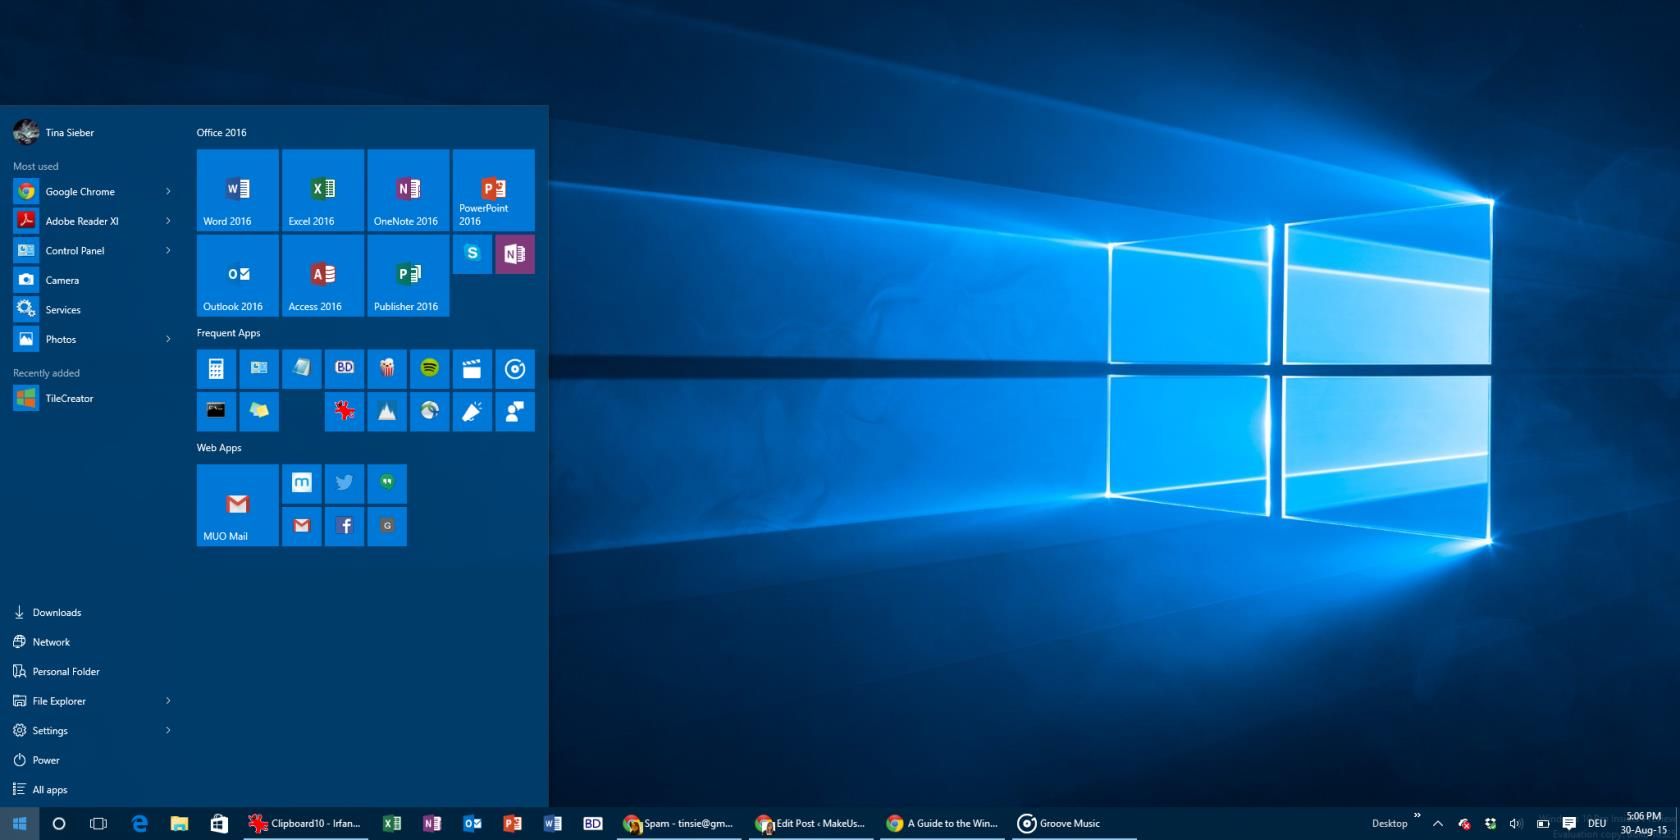 personalize unactivated windows 10